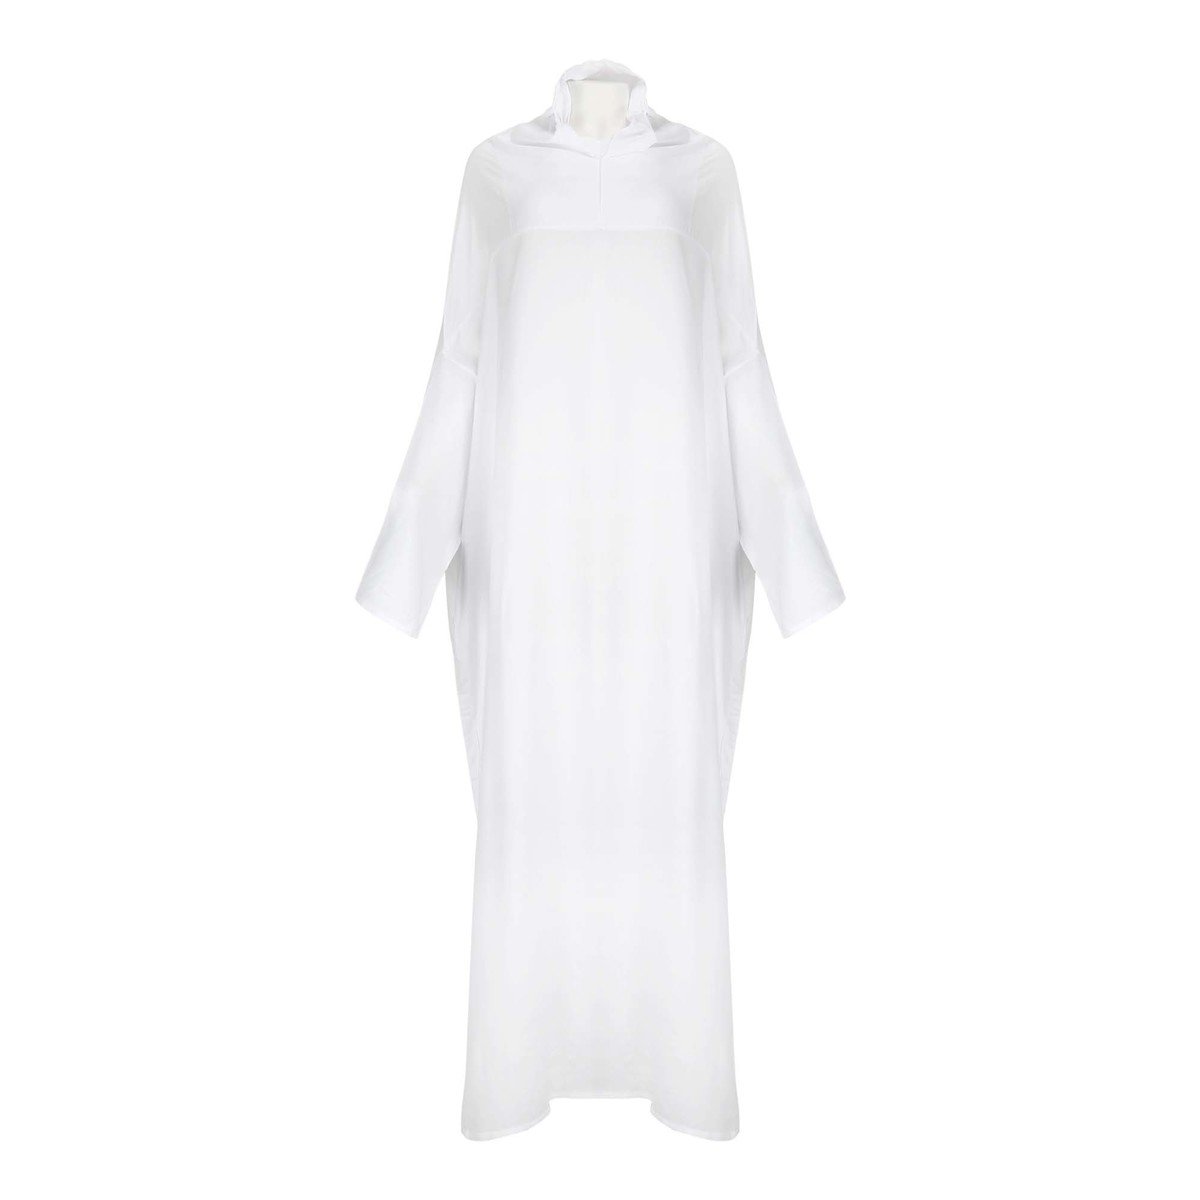 Cortigiani Teenage Prayer Dress A401 White Small